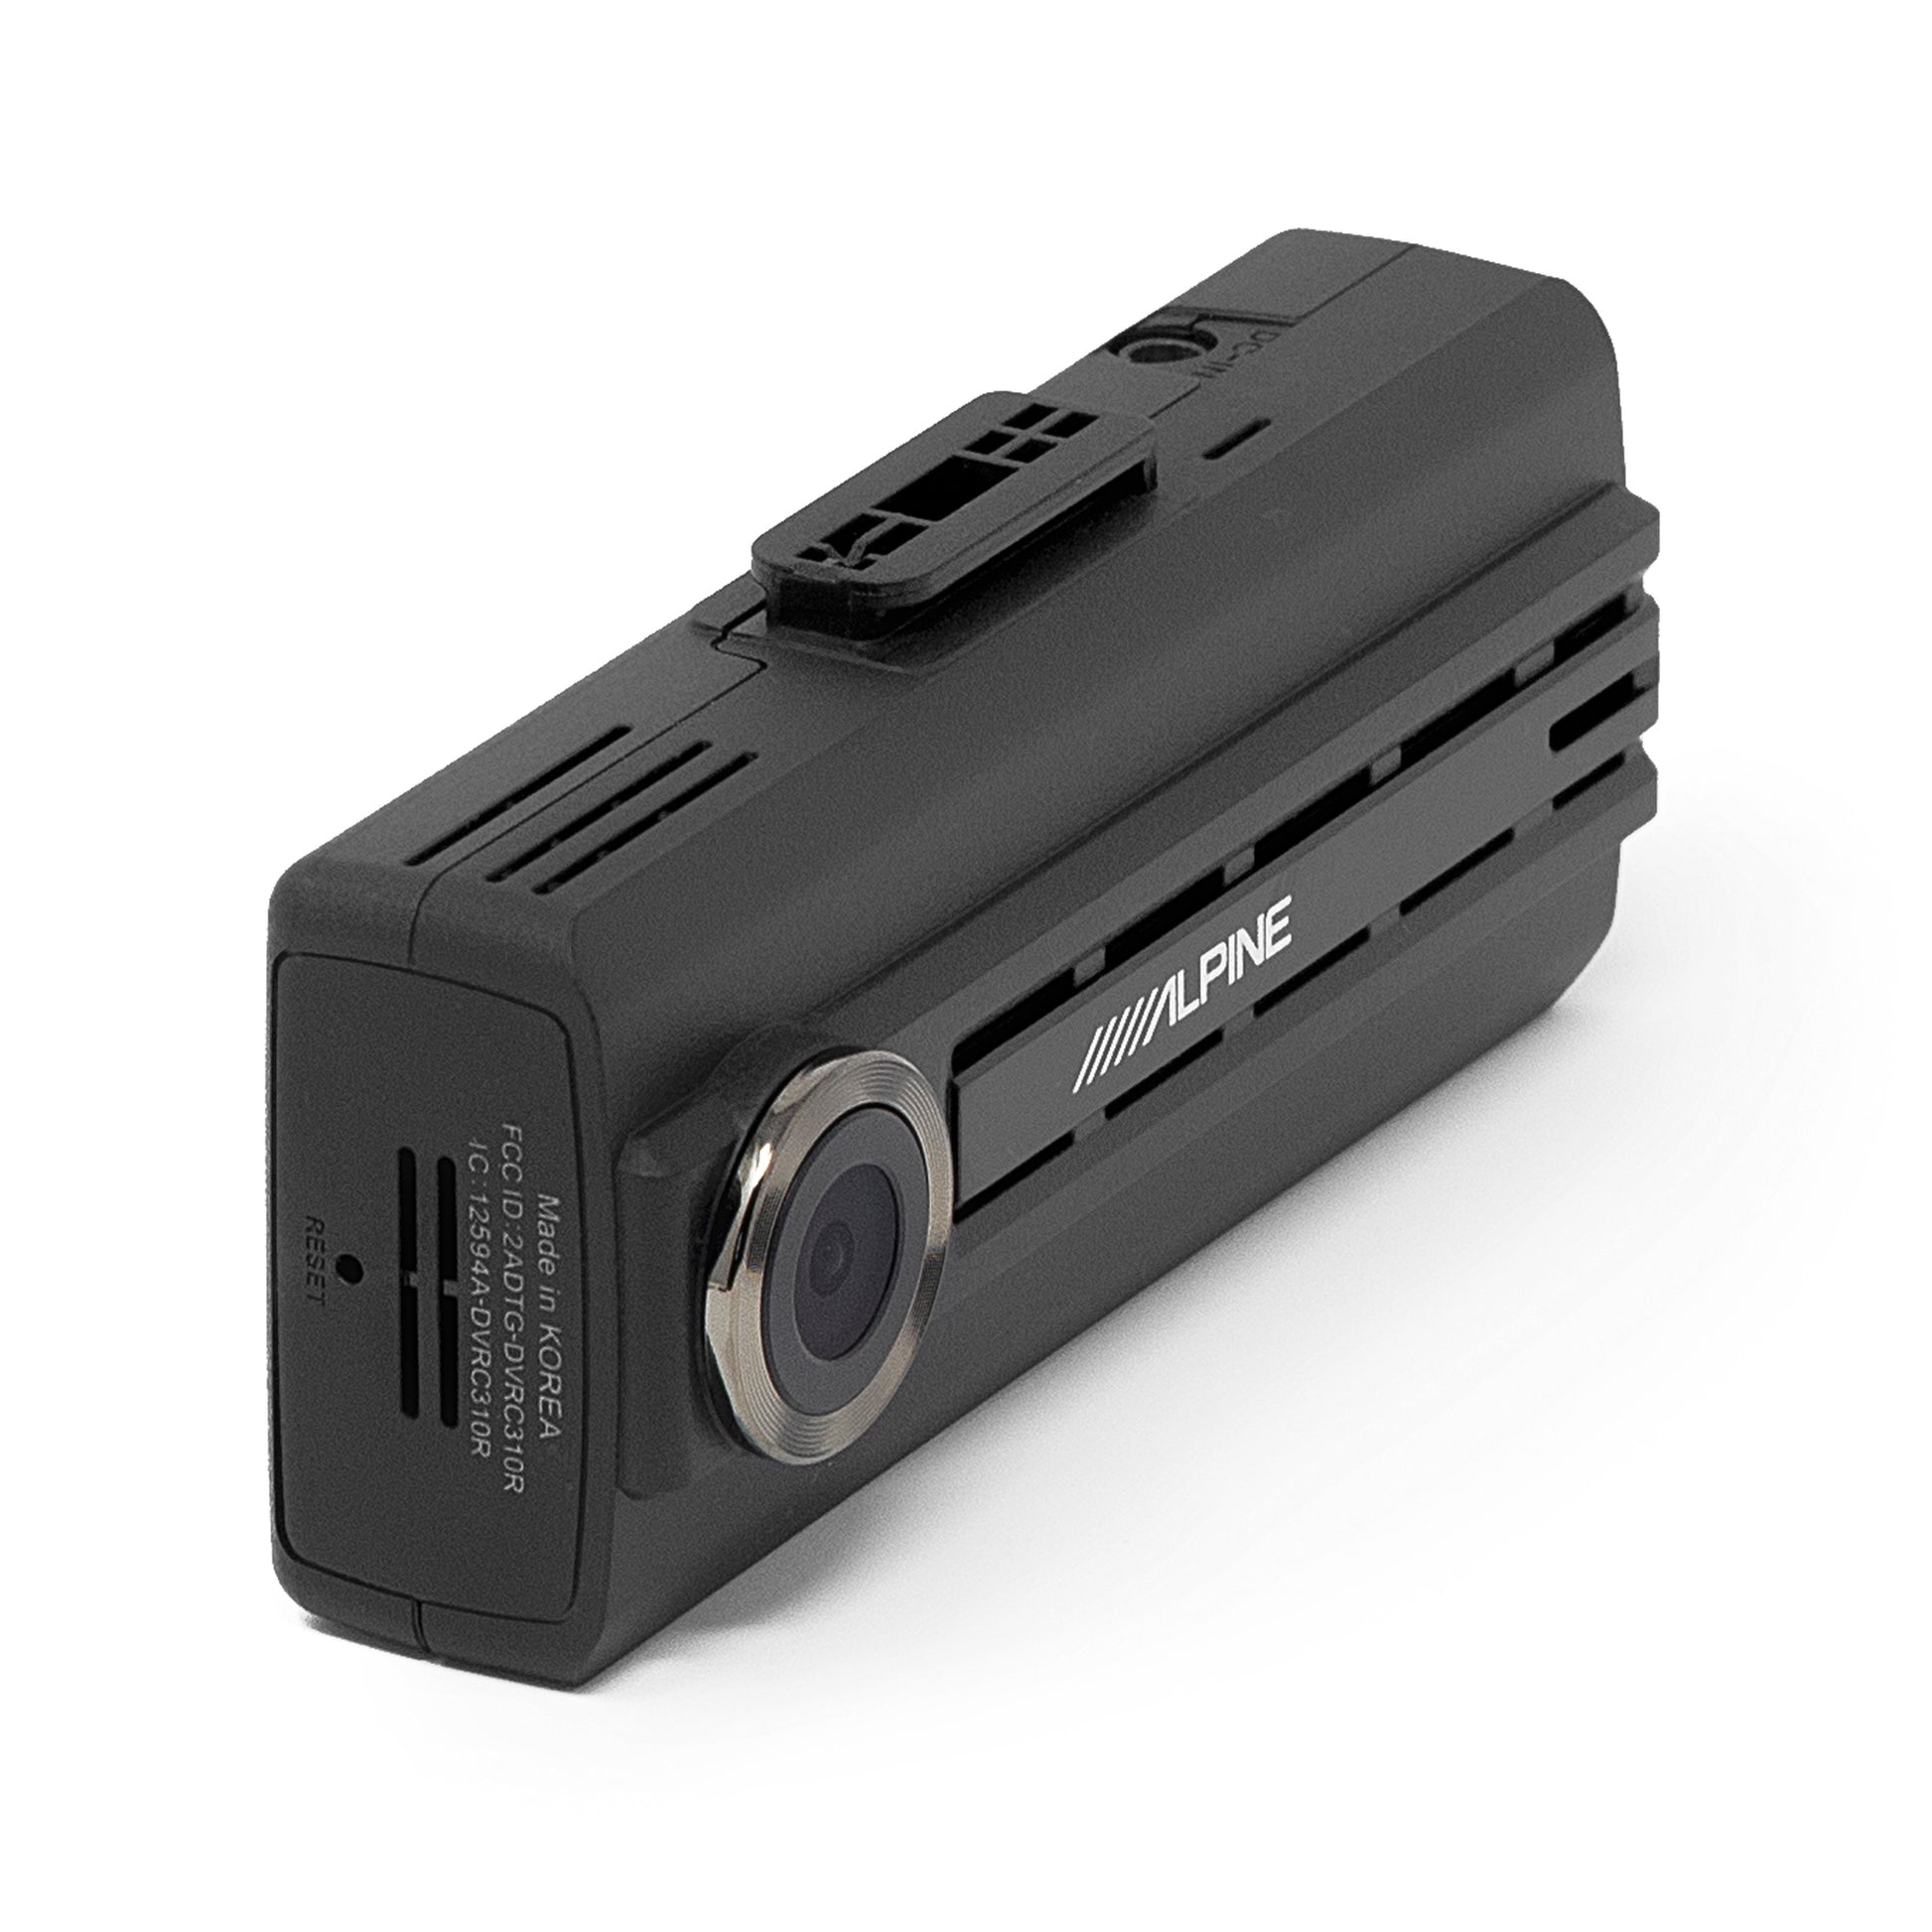 DRV-A501WDP, Cameras, Car Audio, Car Entertainment